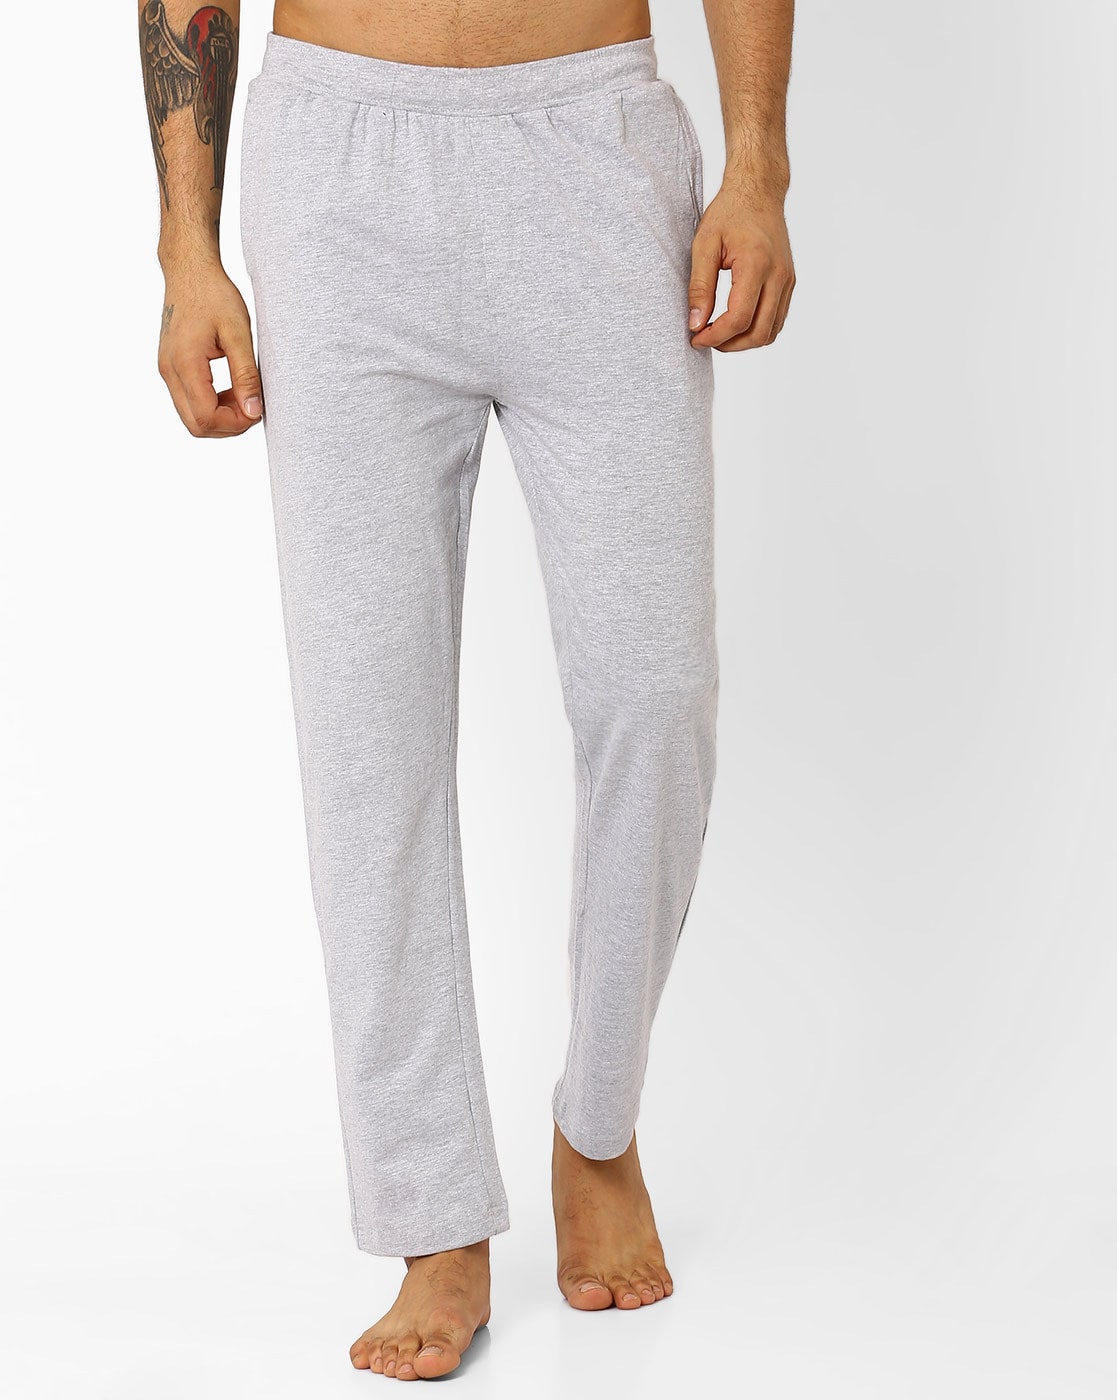 Hanes Men's Cotton Camo Print Pajama Pants